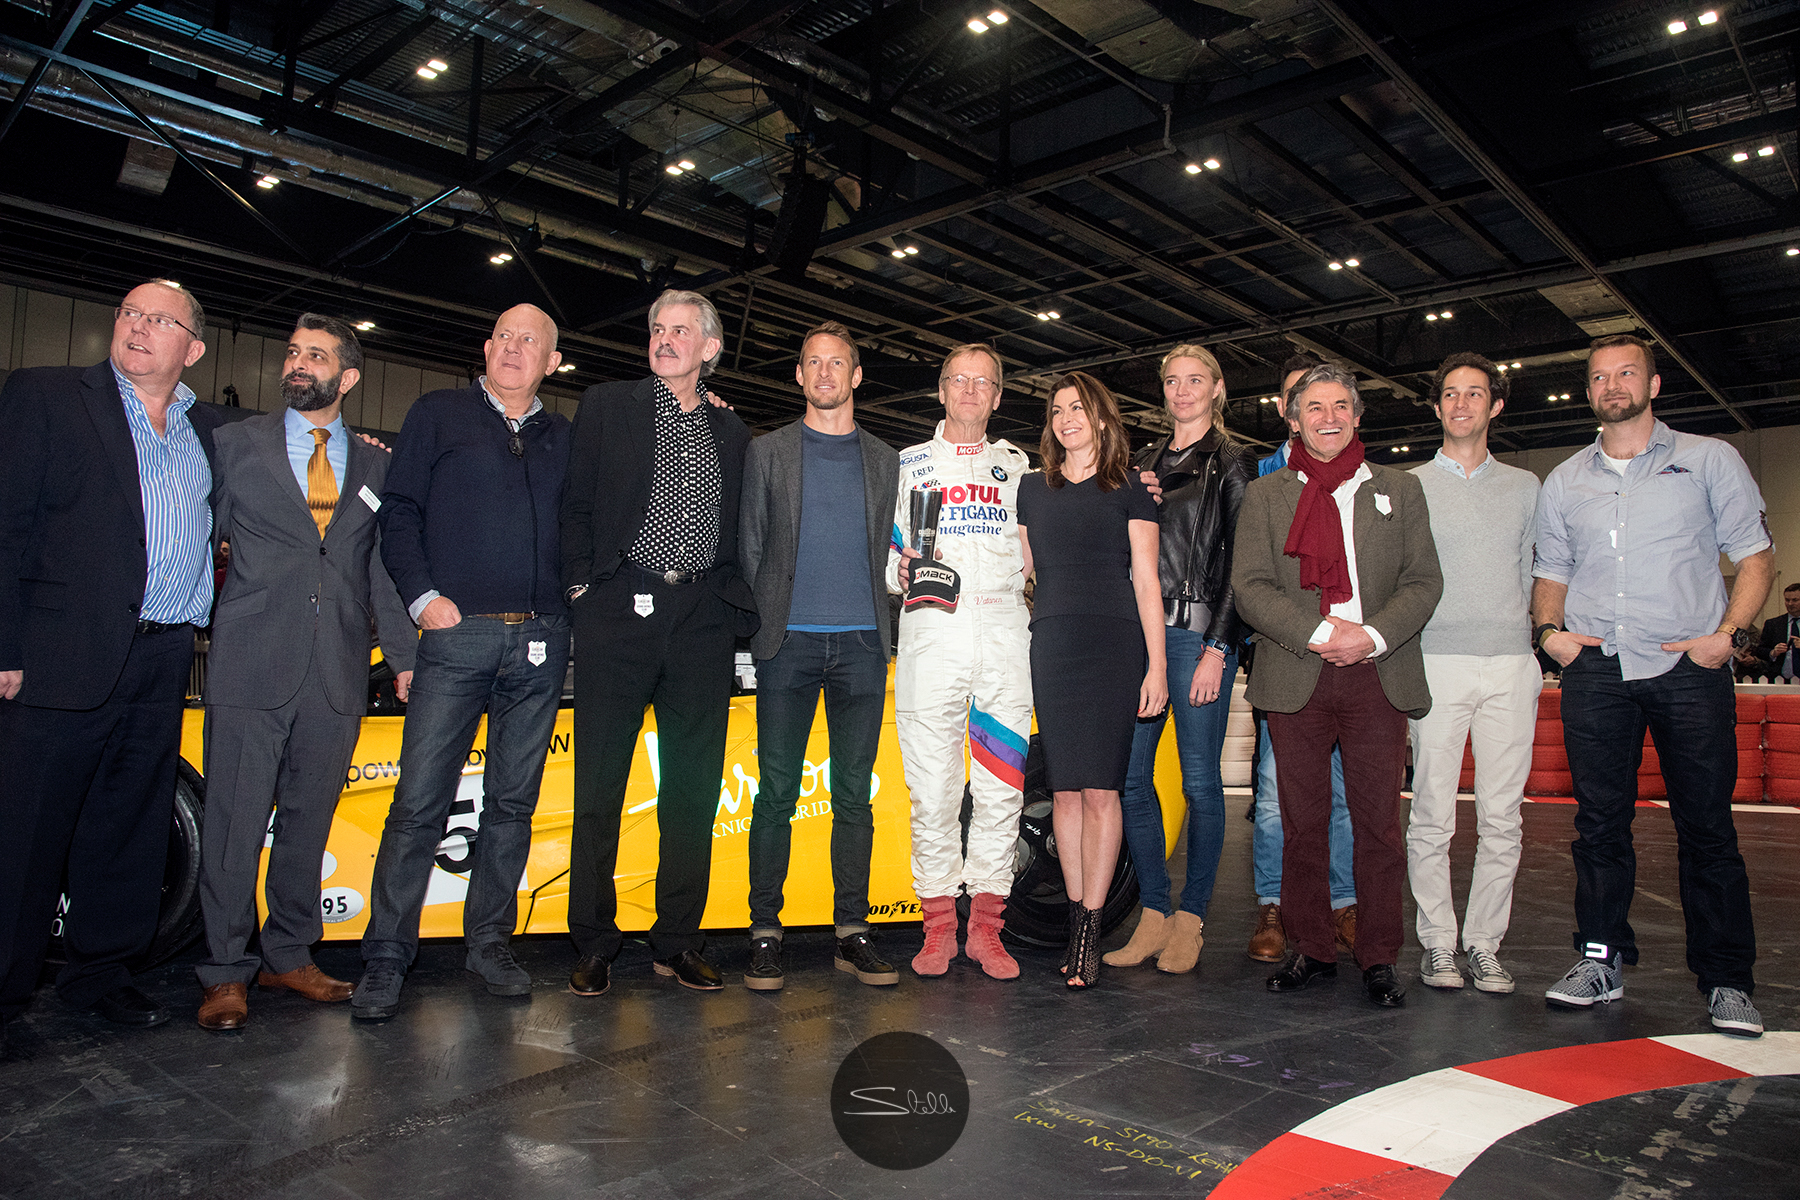 Stella Scordellis London Classic Car Show 2016 14 Watermarked.jpg